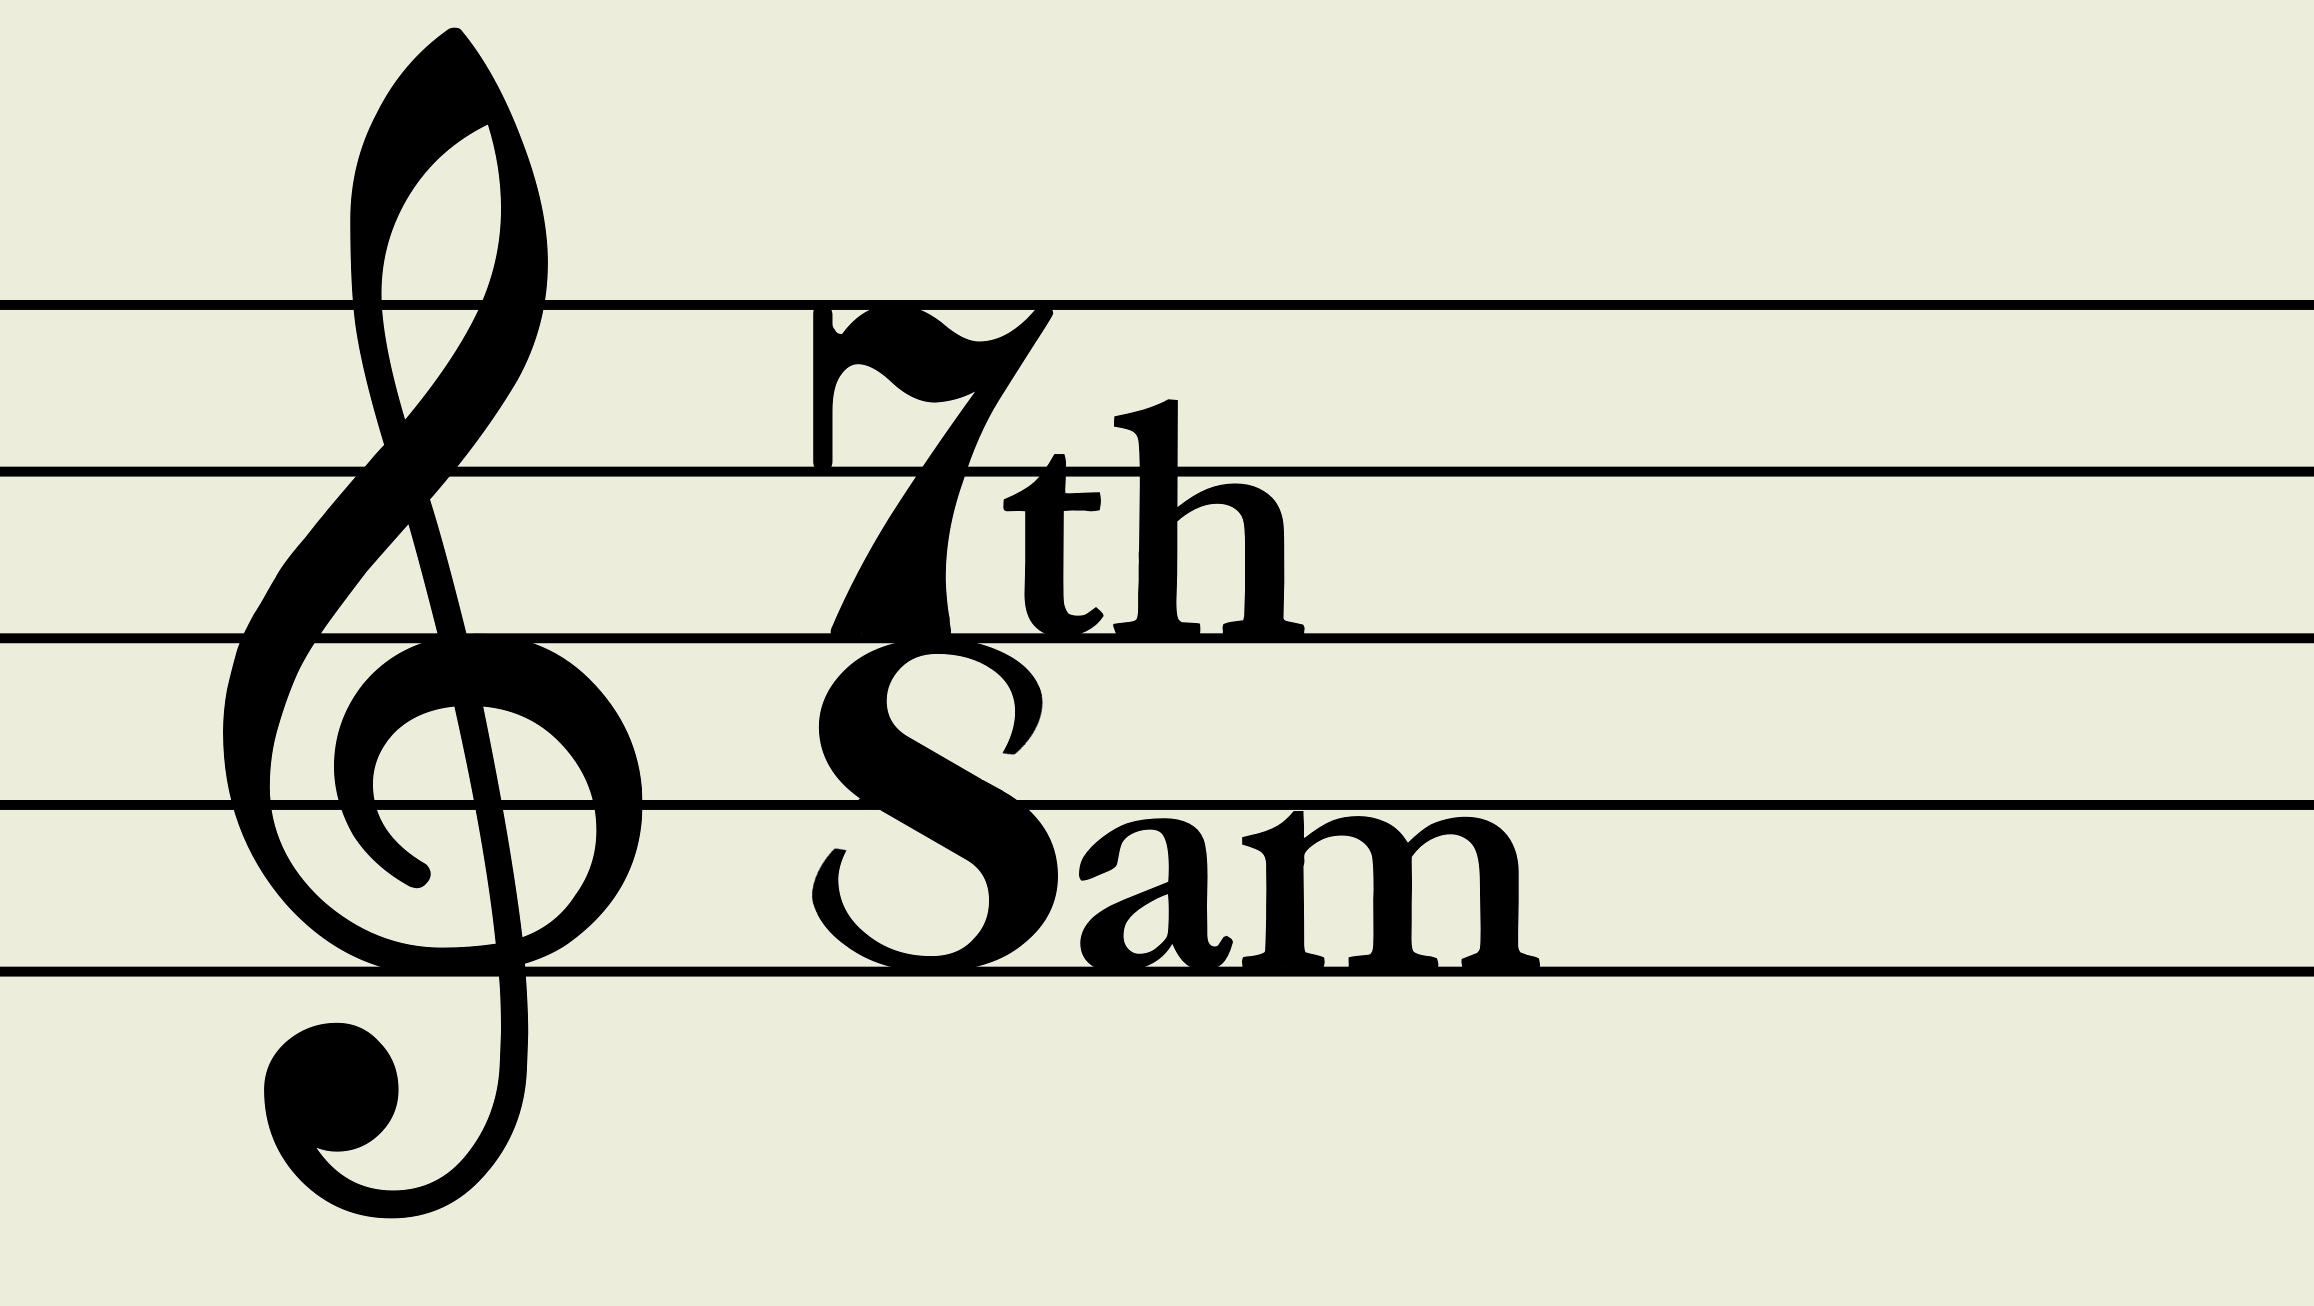 Seventh Sam